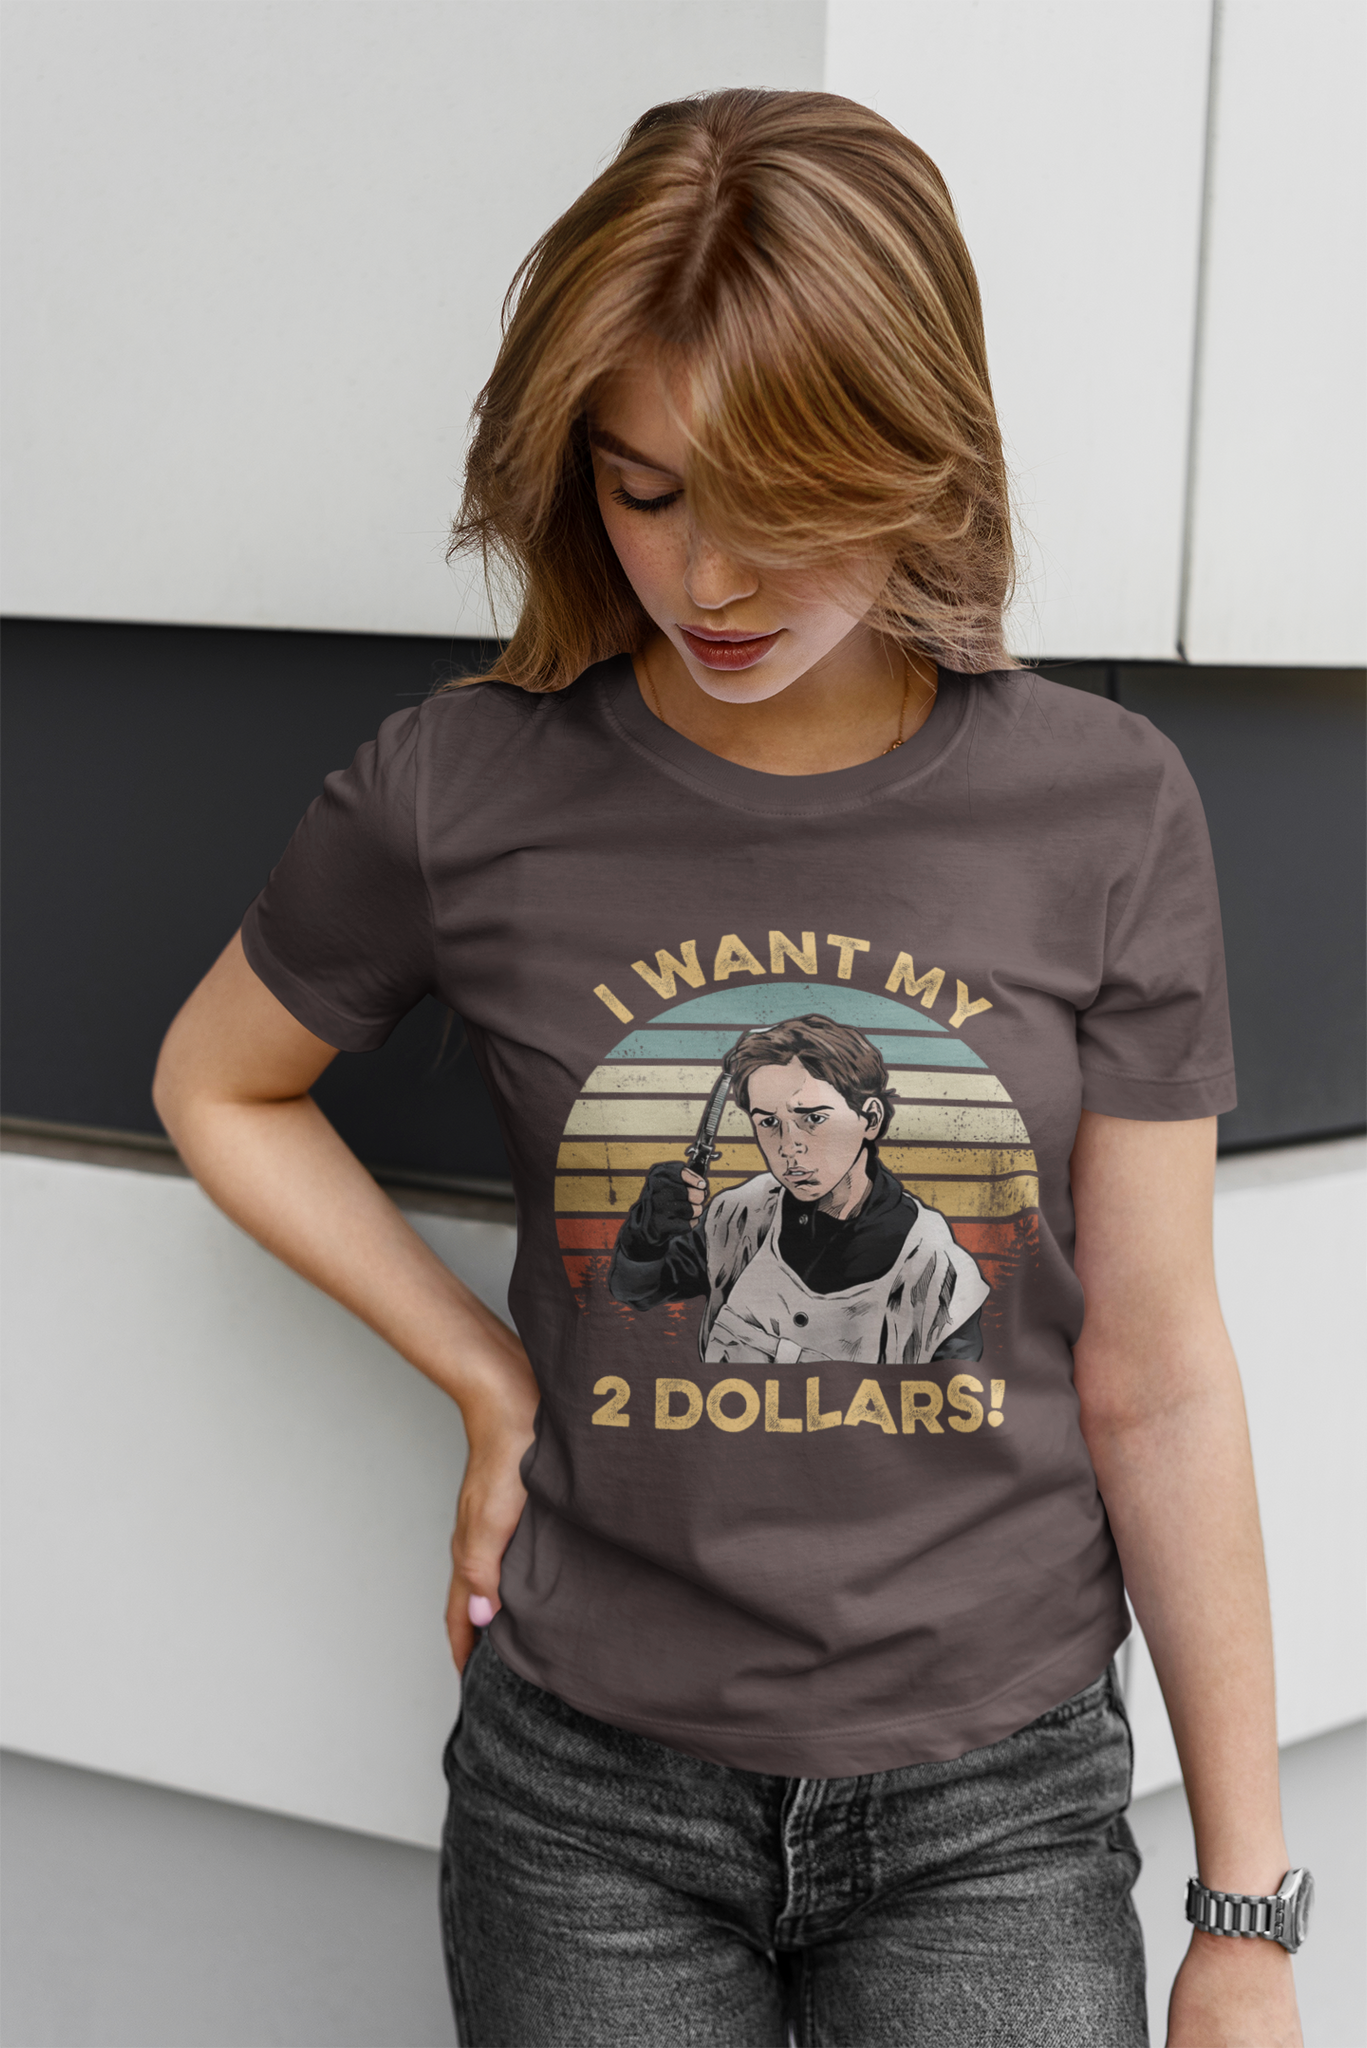 Better Off Dead Comedy Film T Shirt, Johnny Gasparini T Shirt, I Want My 2 Dollars Tshirt